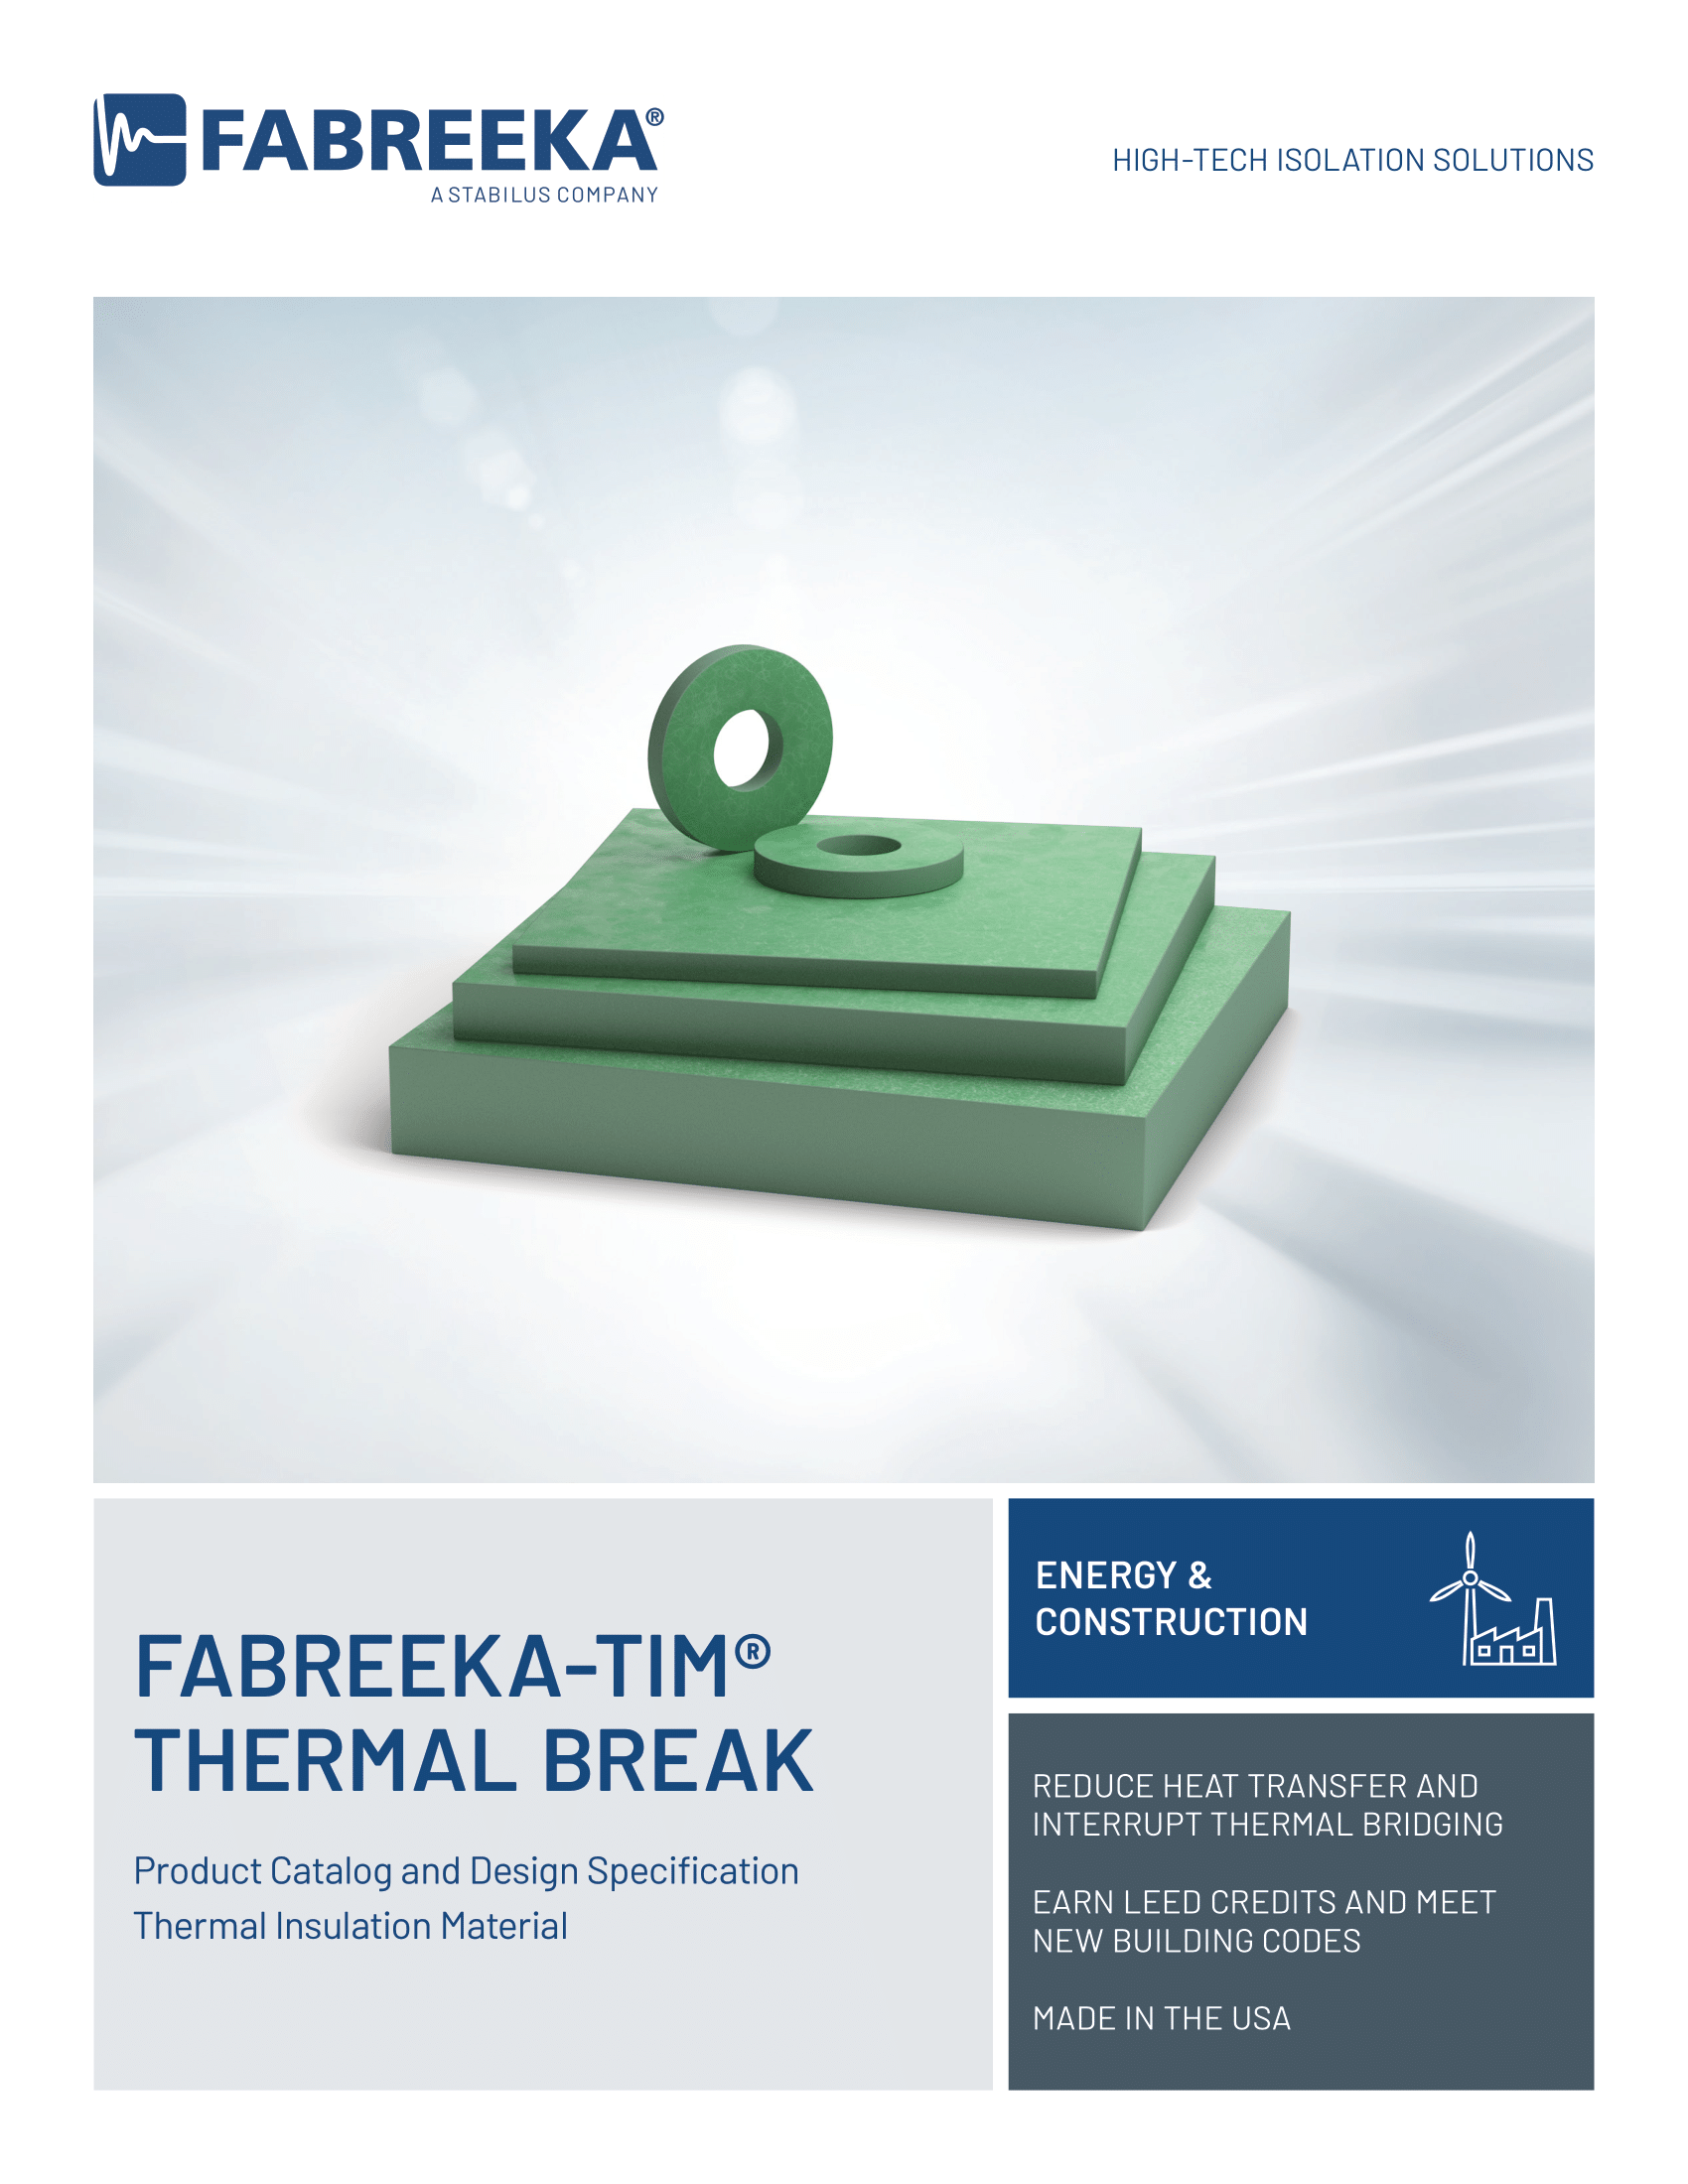 Fabreeka Washer - Fabreeka - Vibration Isolation, Impact Shock Control, and  Thermal Break